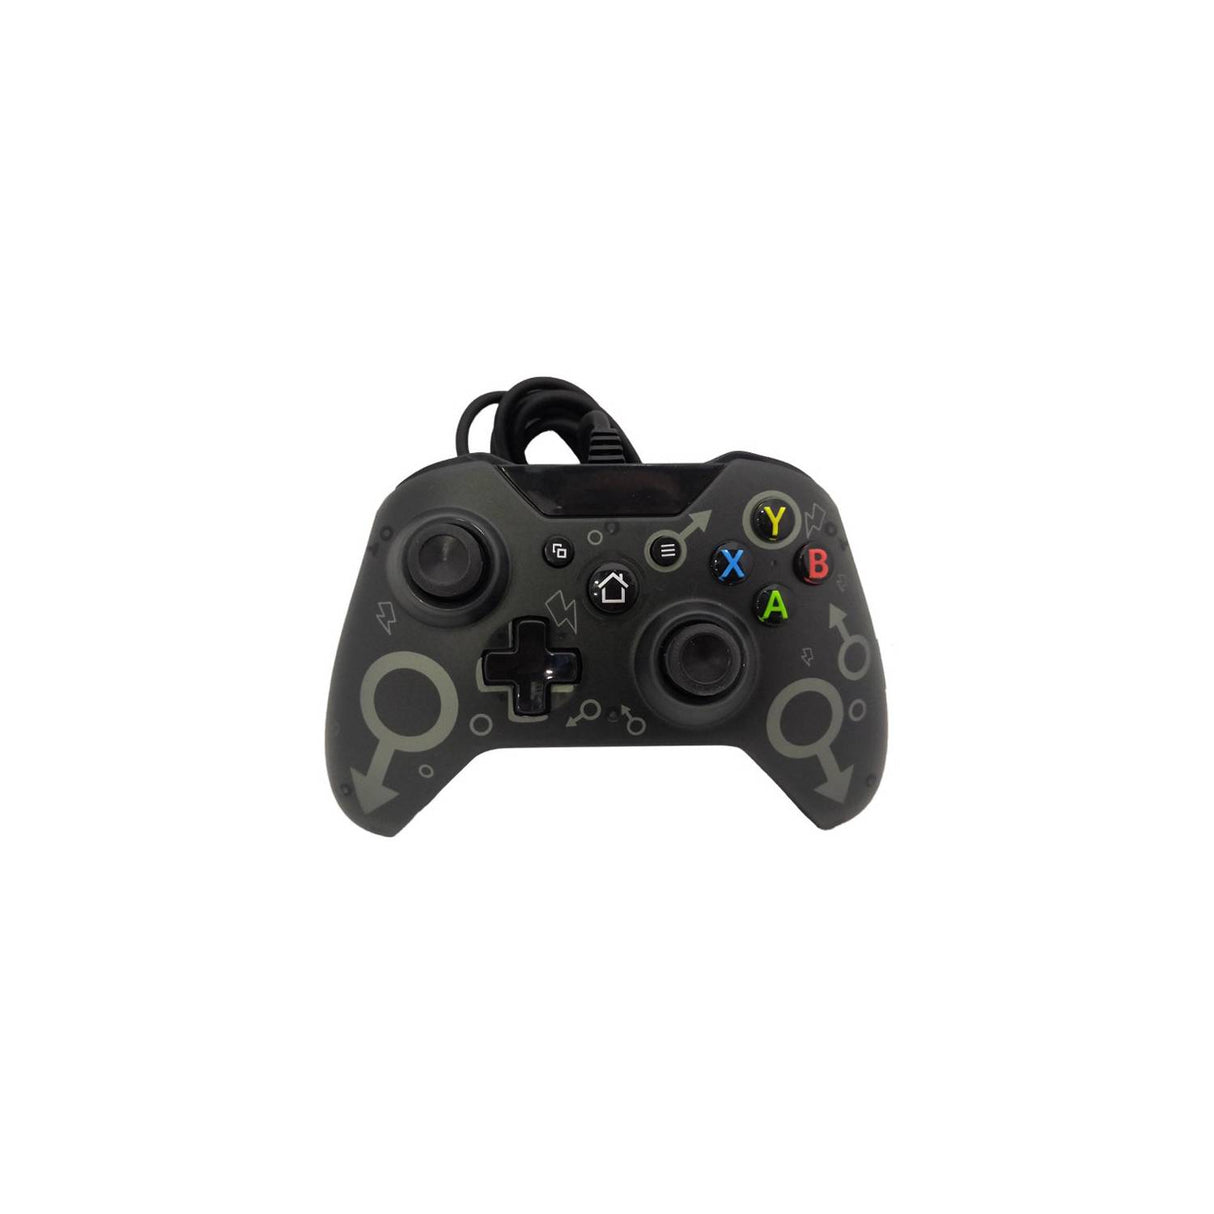 GENERICO Joystick Mando Control Xbox 360 Pc Cable Alternativo